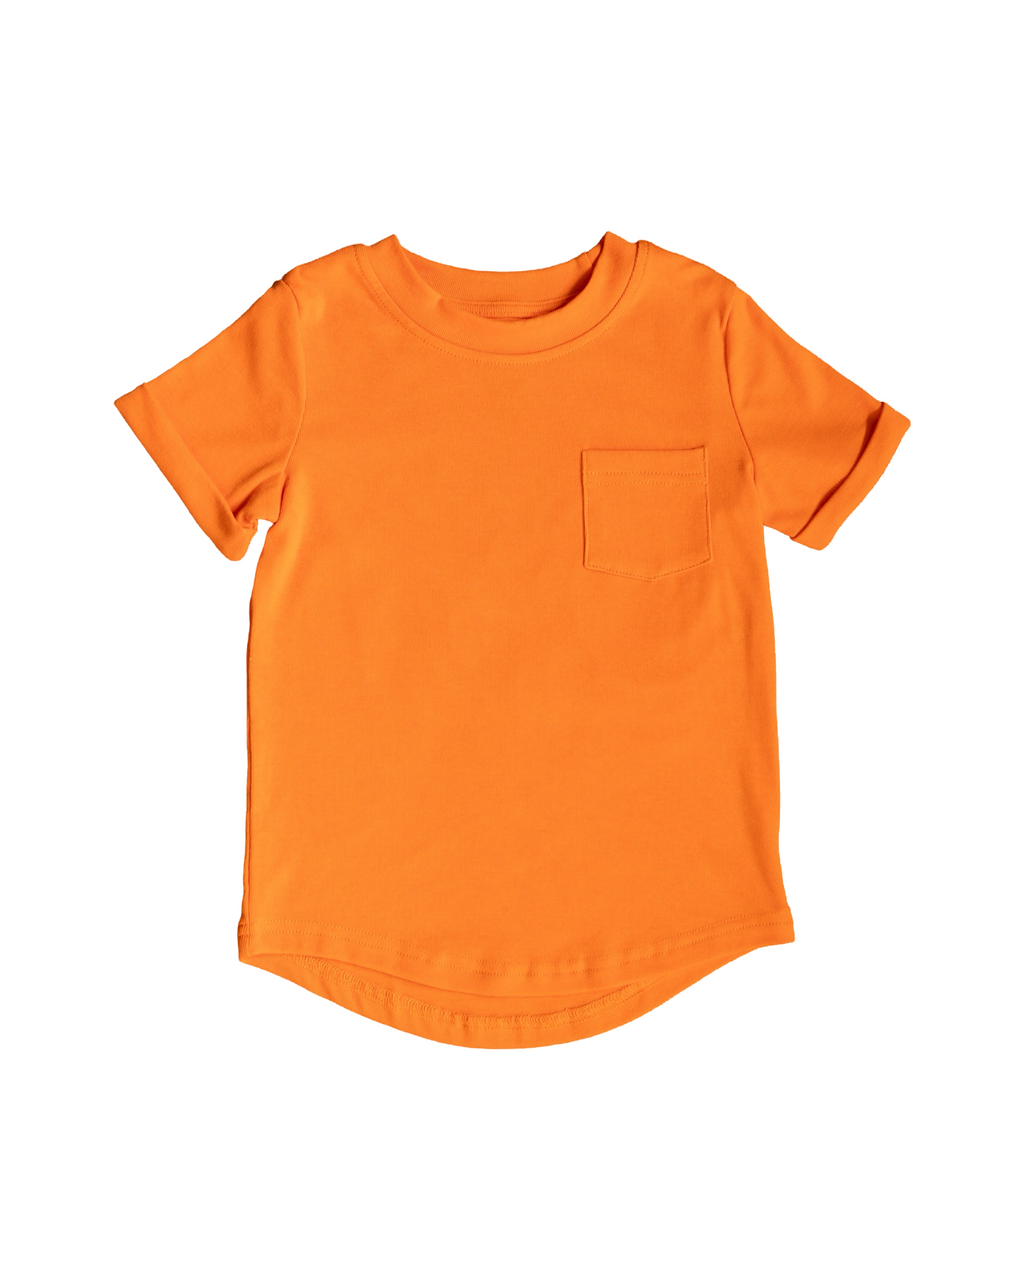 Neon Orange Kids Pocket Tee